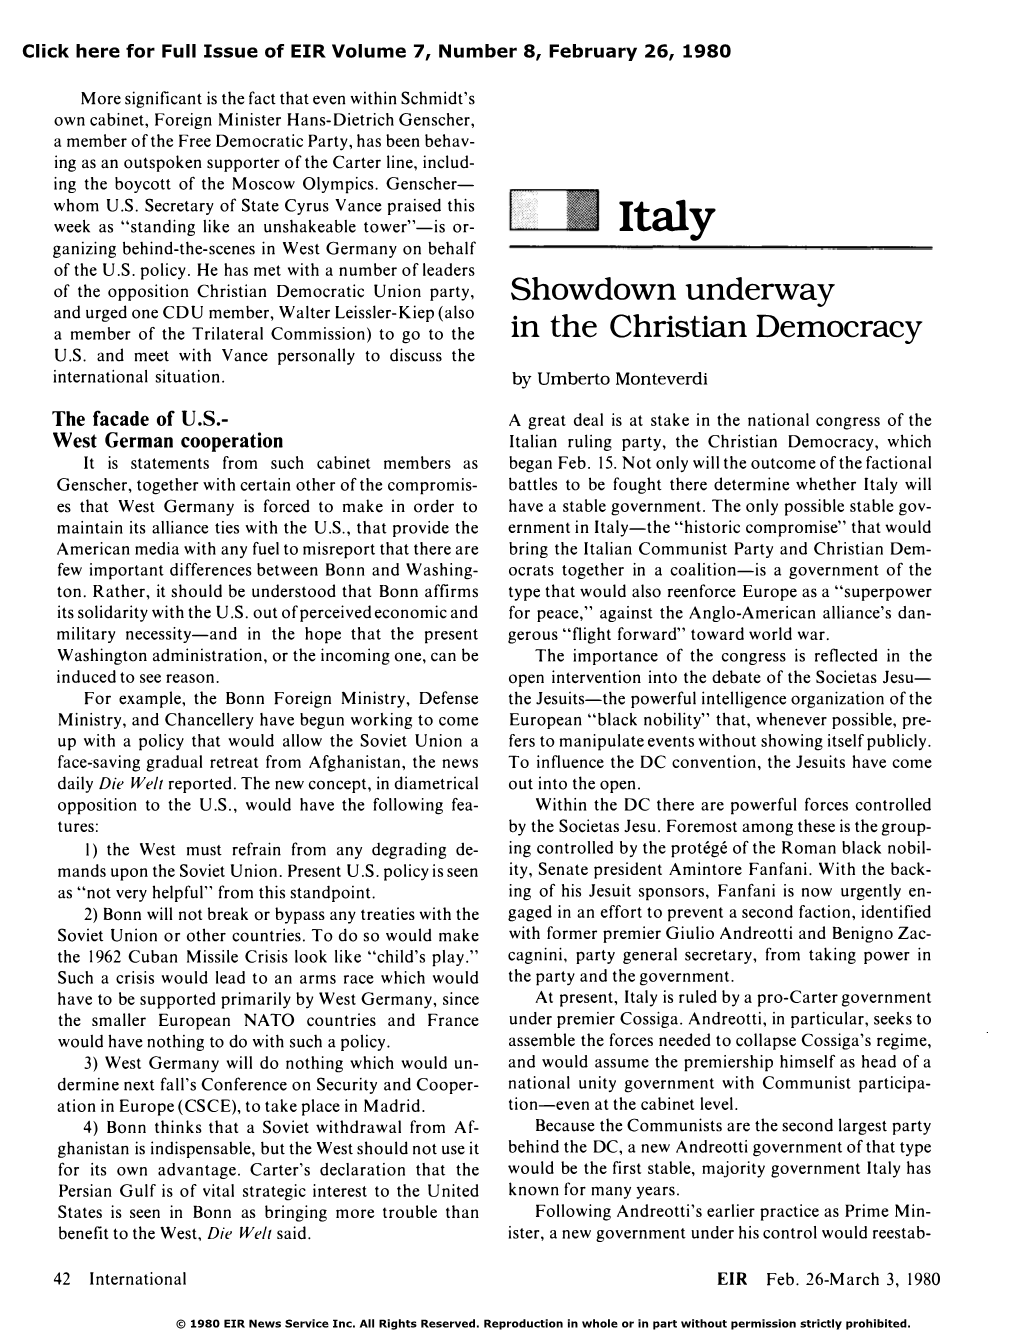 Italy: Showdown Underway at the Christian Democratic Congress